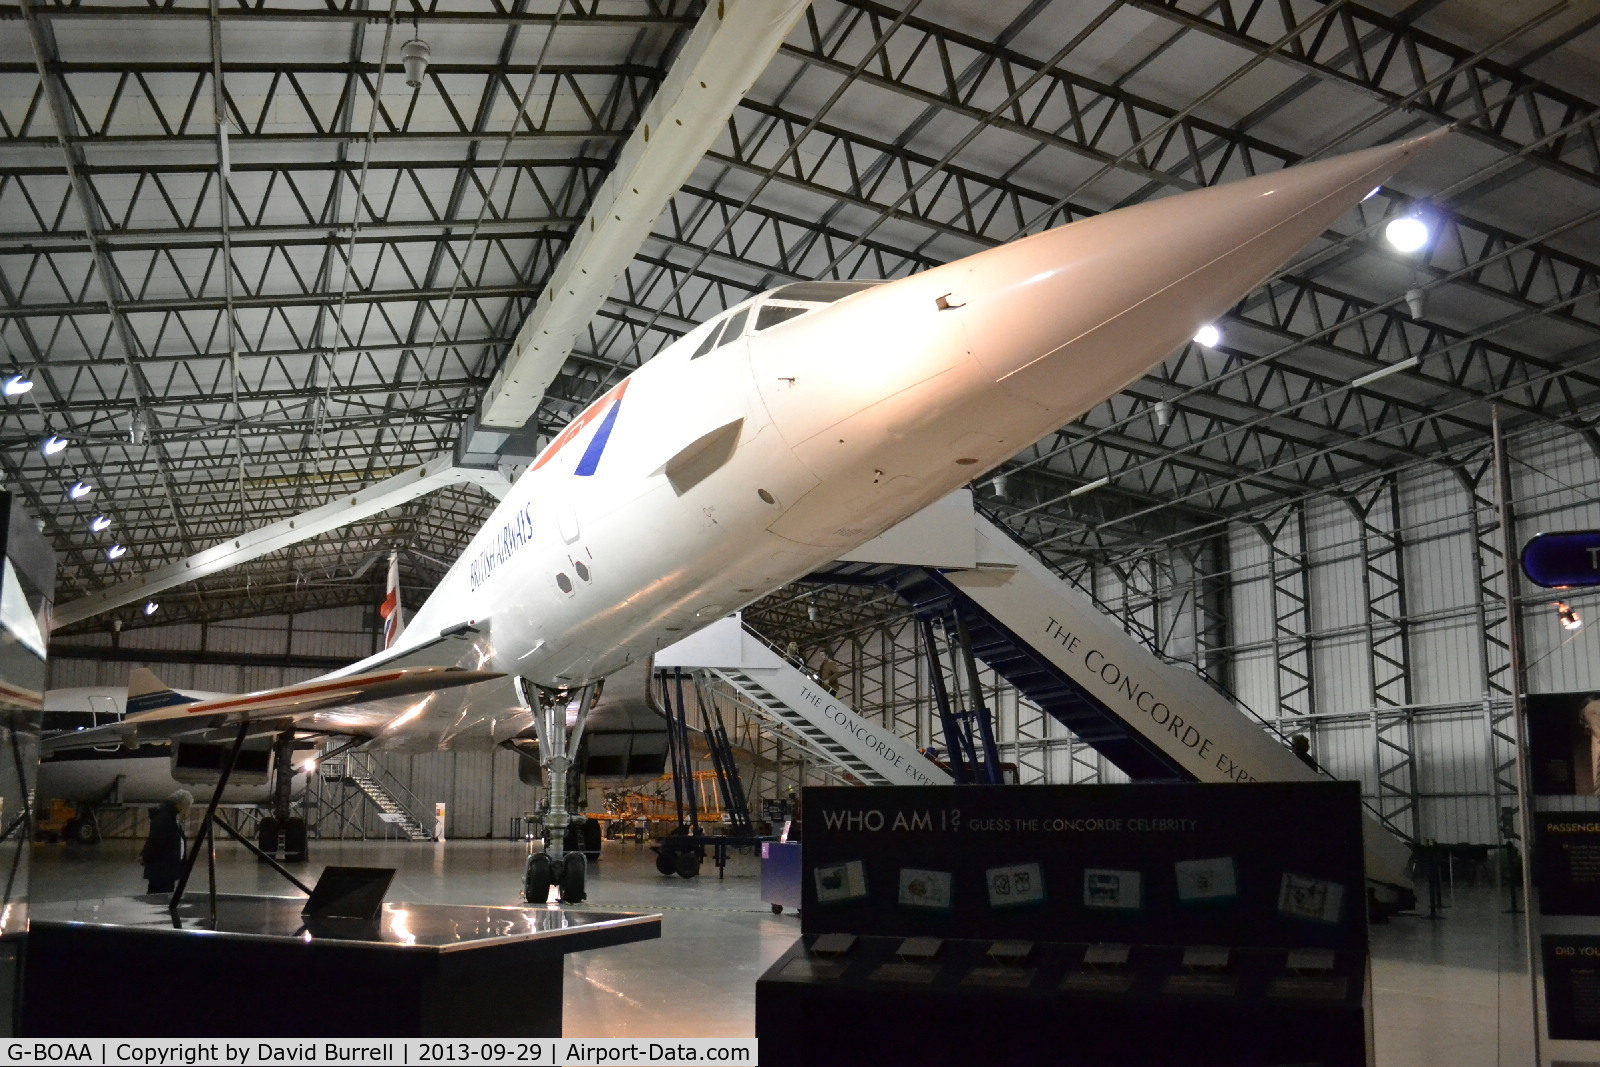 G-BOAA, 1974 Aerospatiale-BAC Concorde 1-102 C/N 100-006, Concorde G-BOAA at the Museum of Flight, East Fortune Airfield, Scotland.